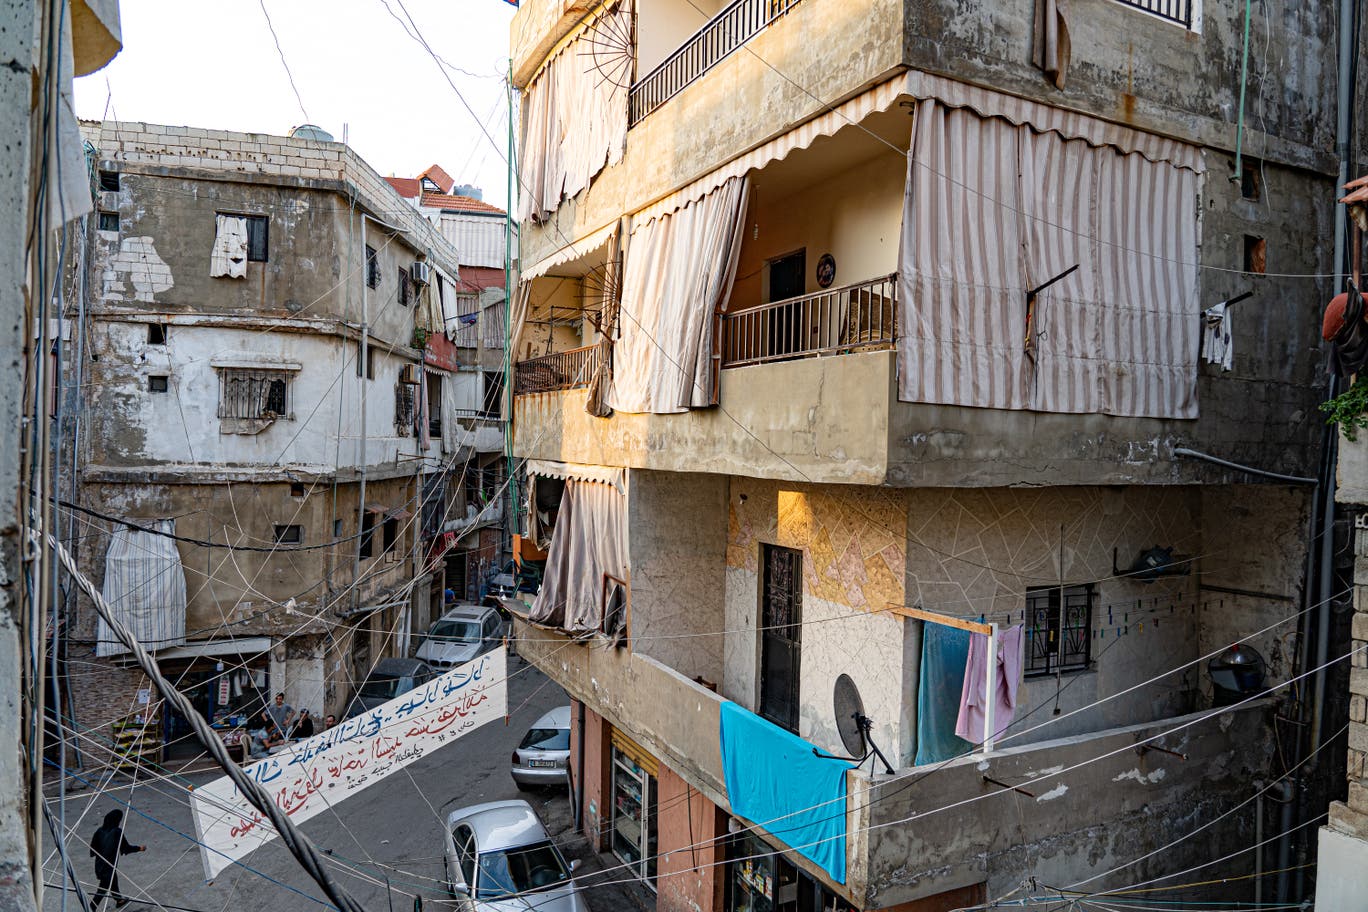 The rundown neighbourhood of Beirut where Hanan and her family live bel trew 2.jpg